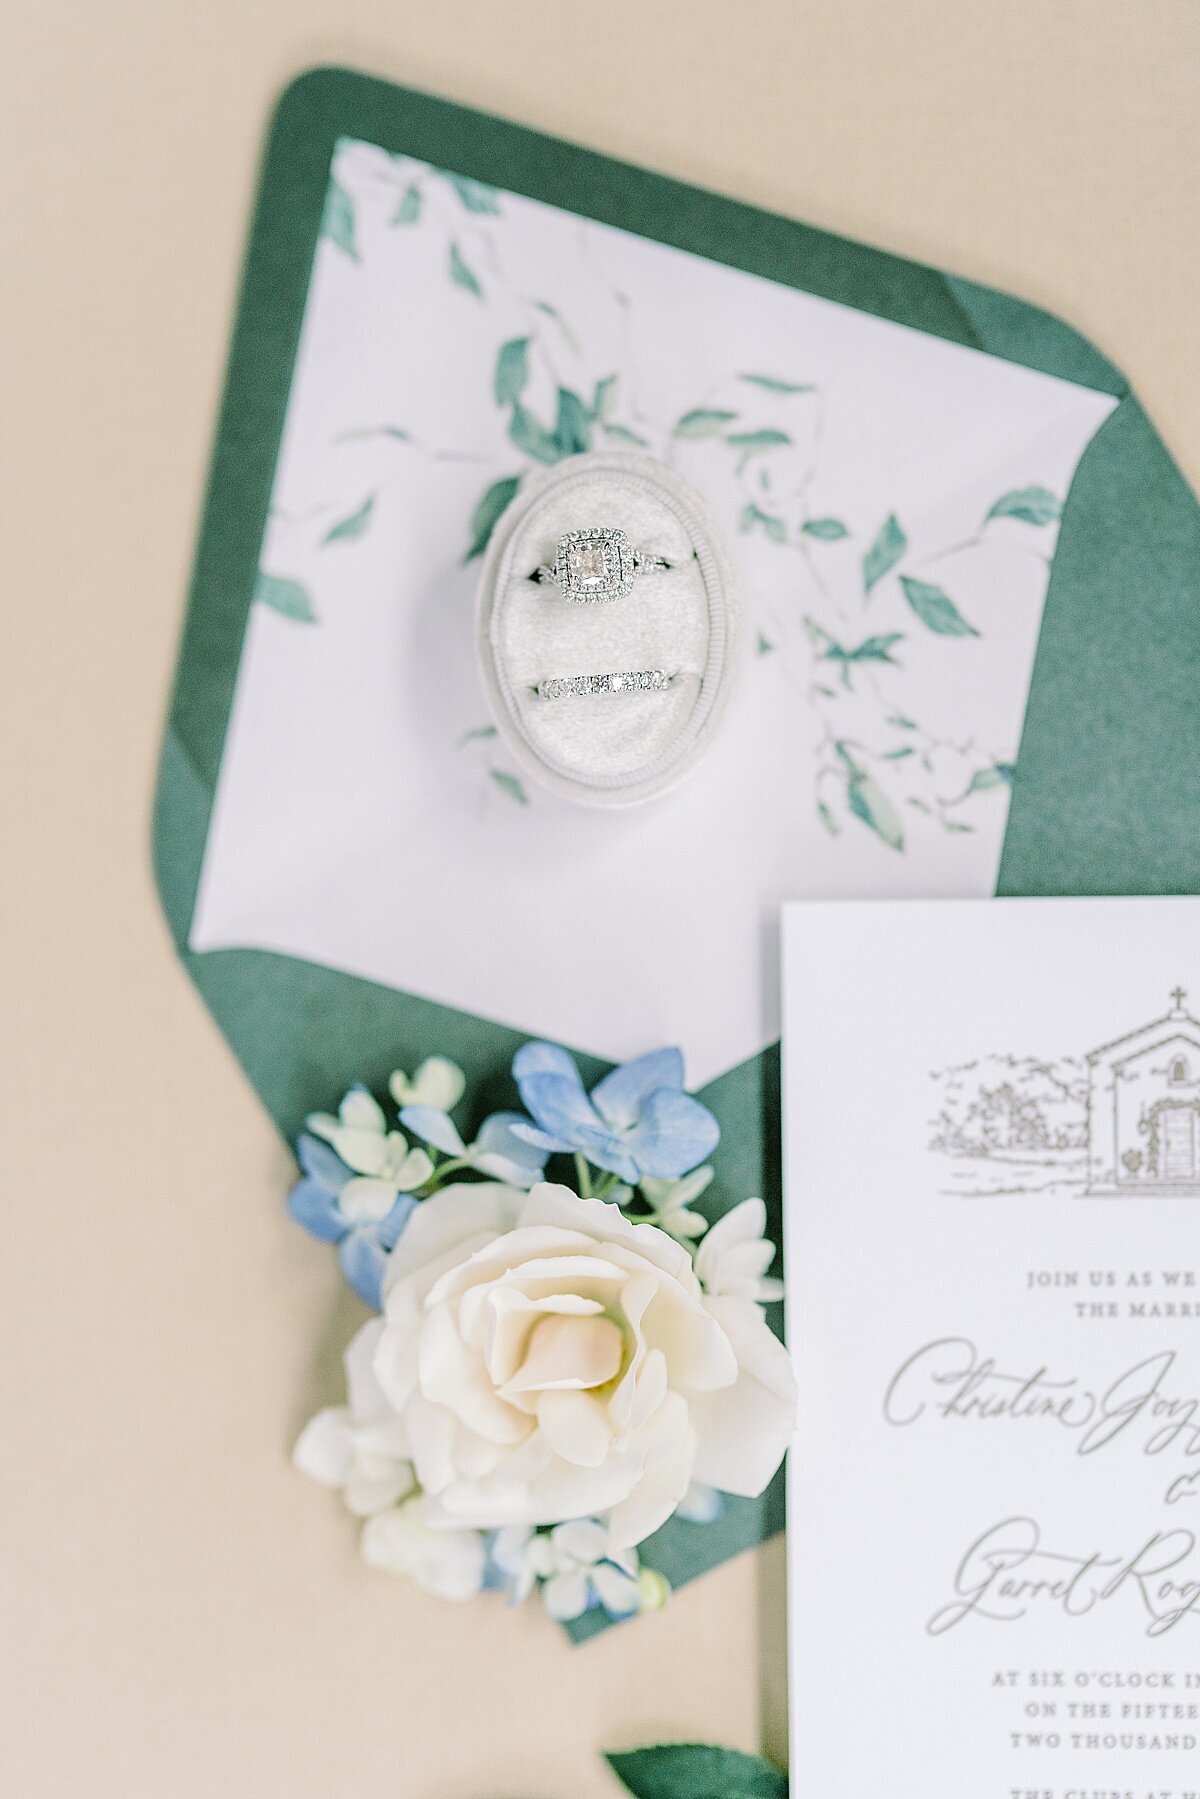 European custom invitation suite | Houston Oaks Wedding | Alicia Yarrish Photography